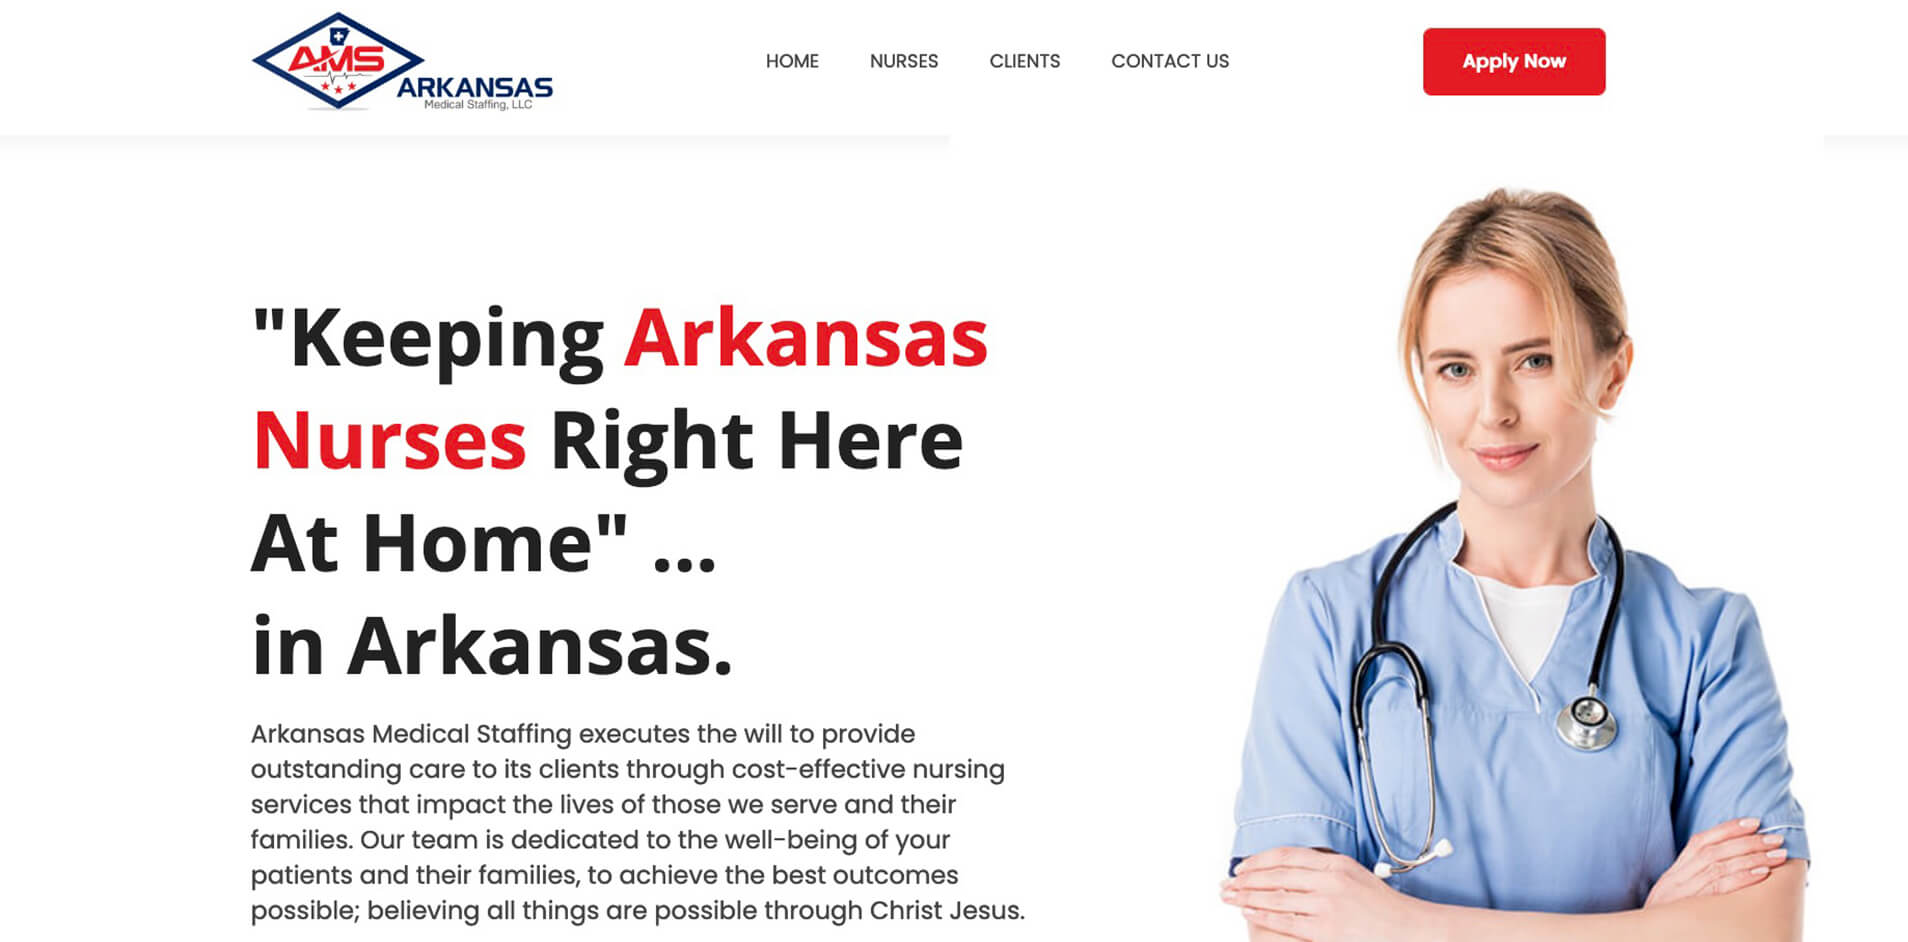 Arkansas Medical Staffing